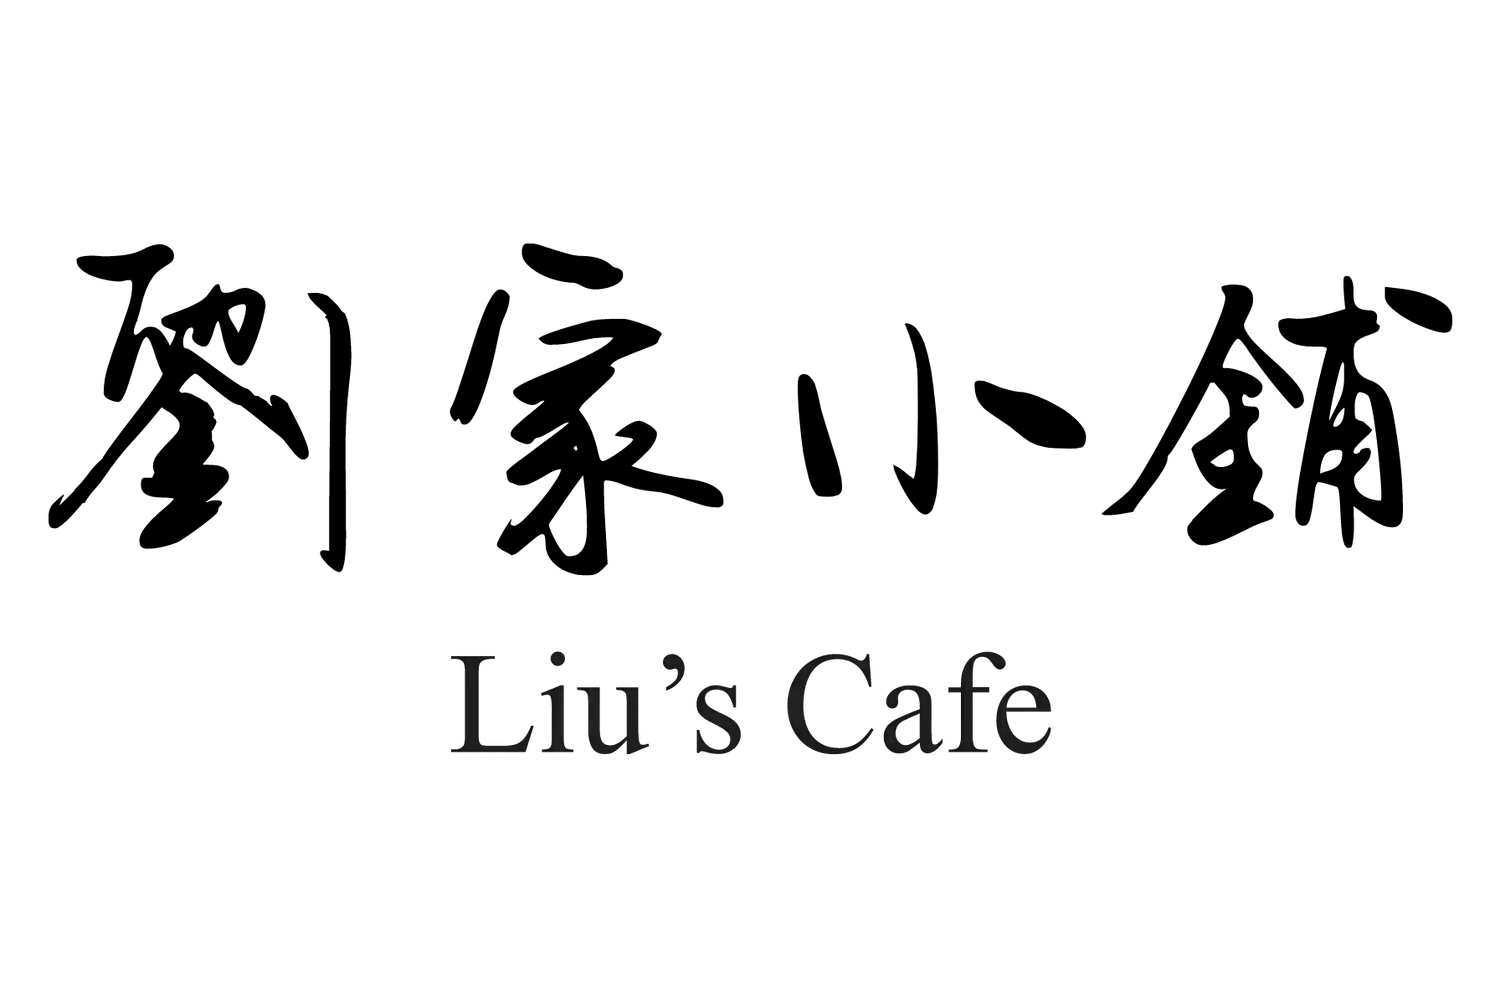 Liu's Cafe